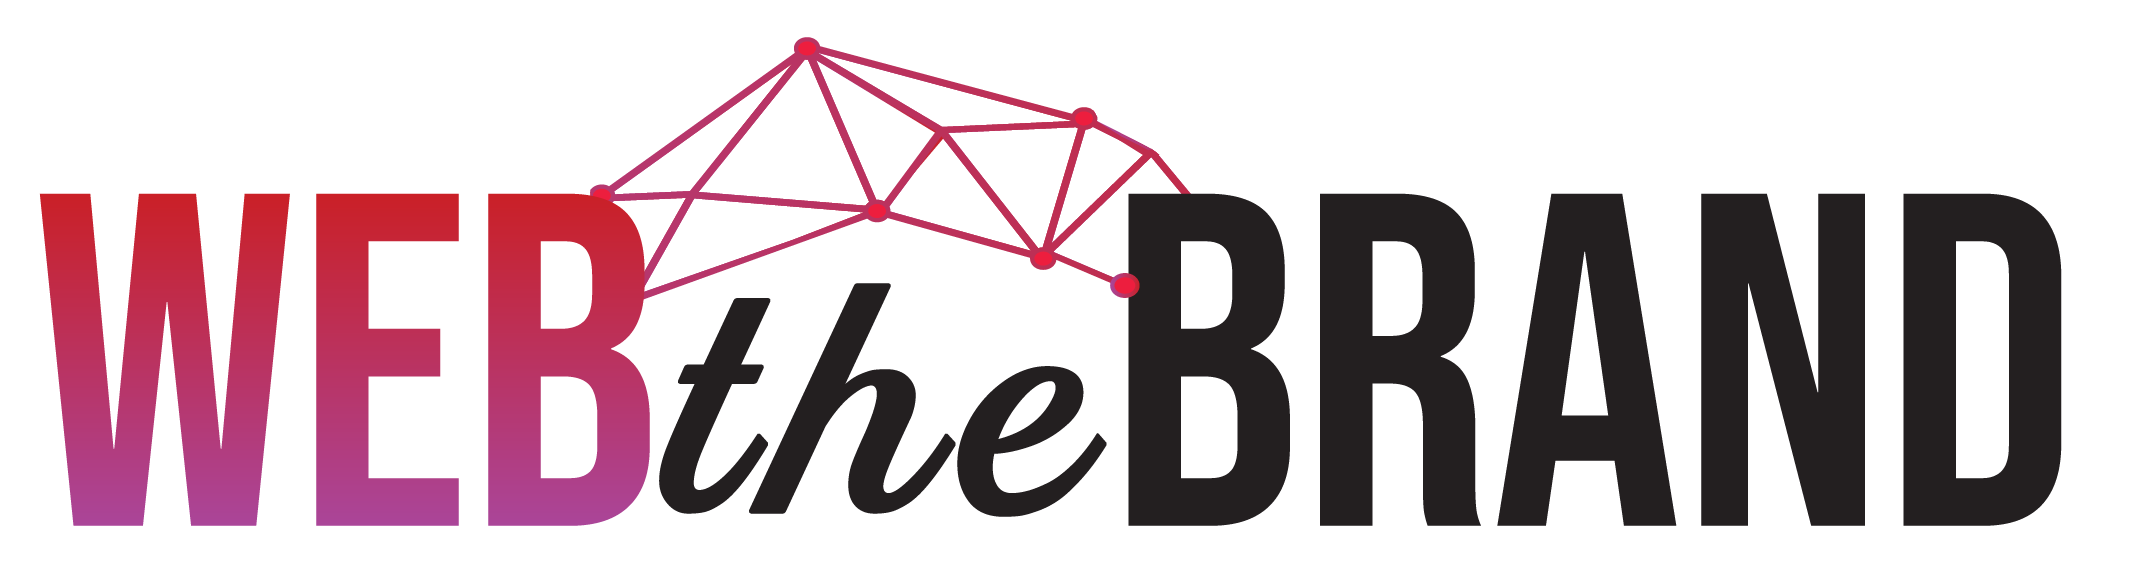 webthebrand logo 03